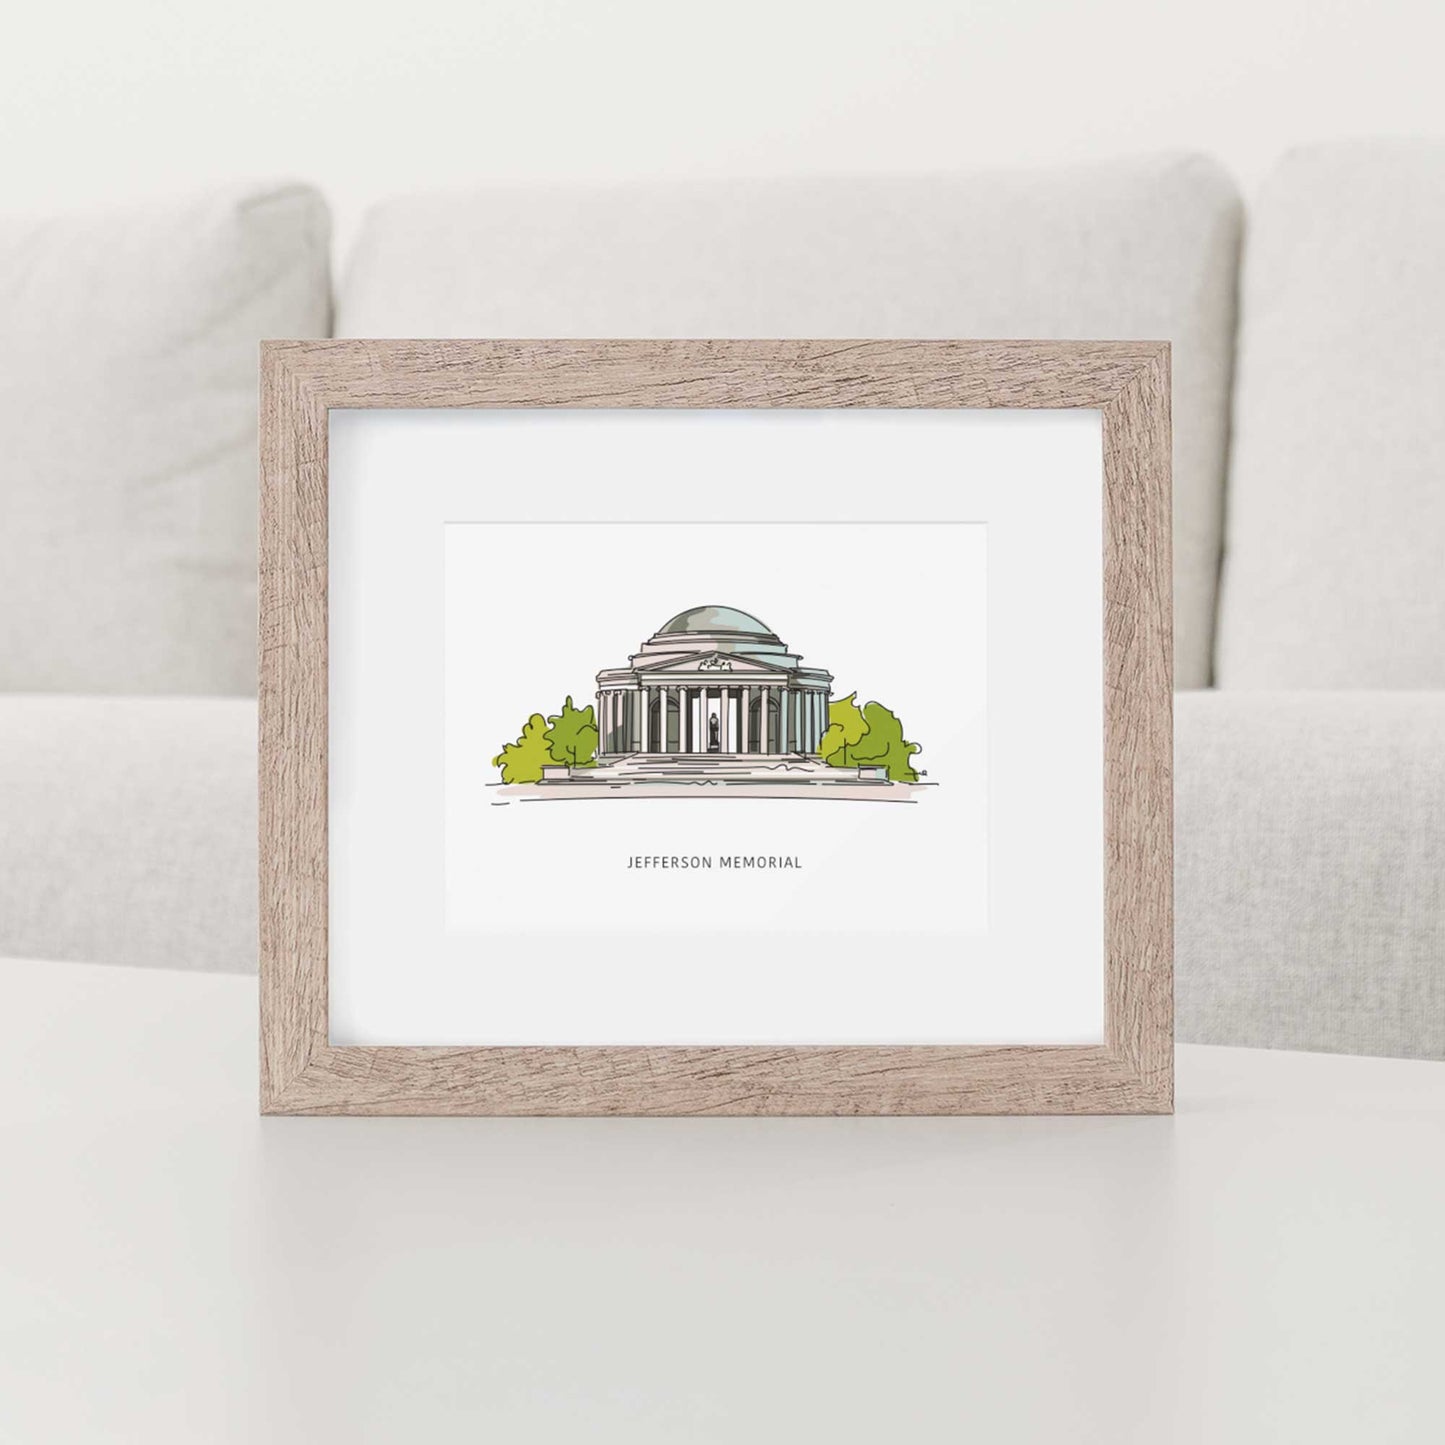 Jefferson Memorial | Washington D.C. Landmark Series